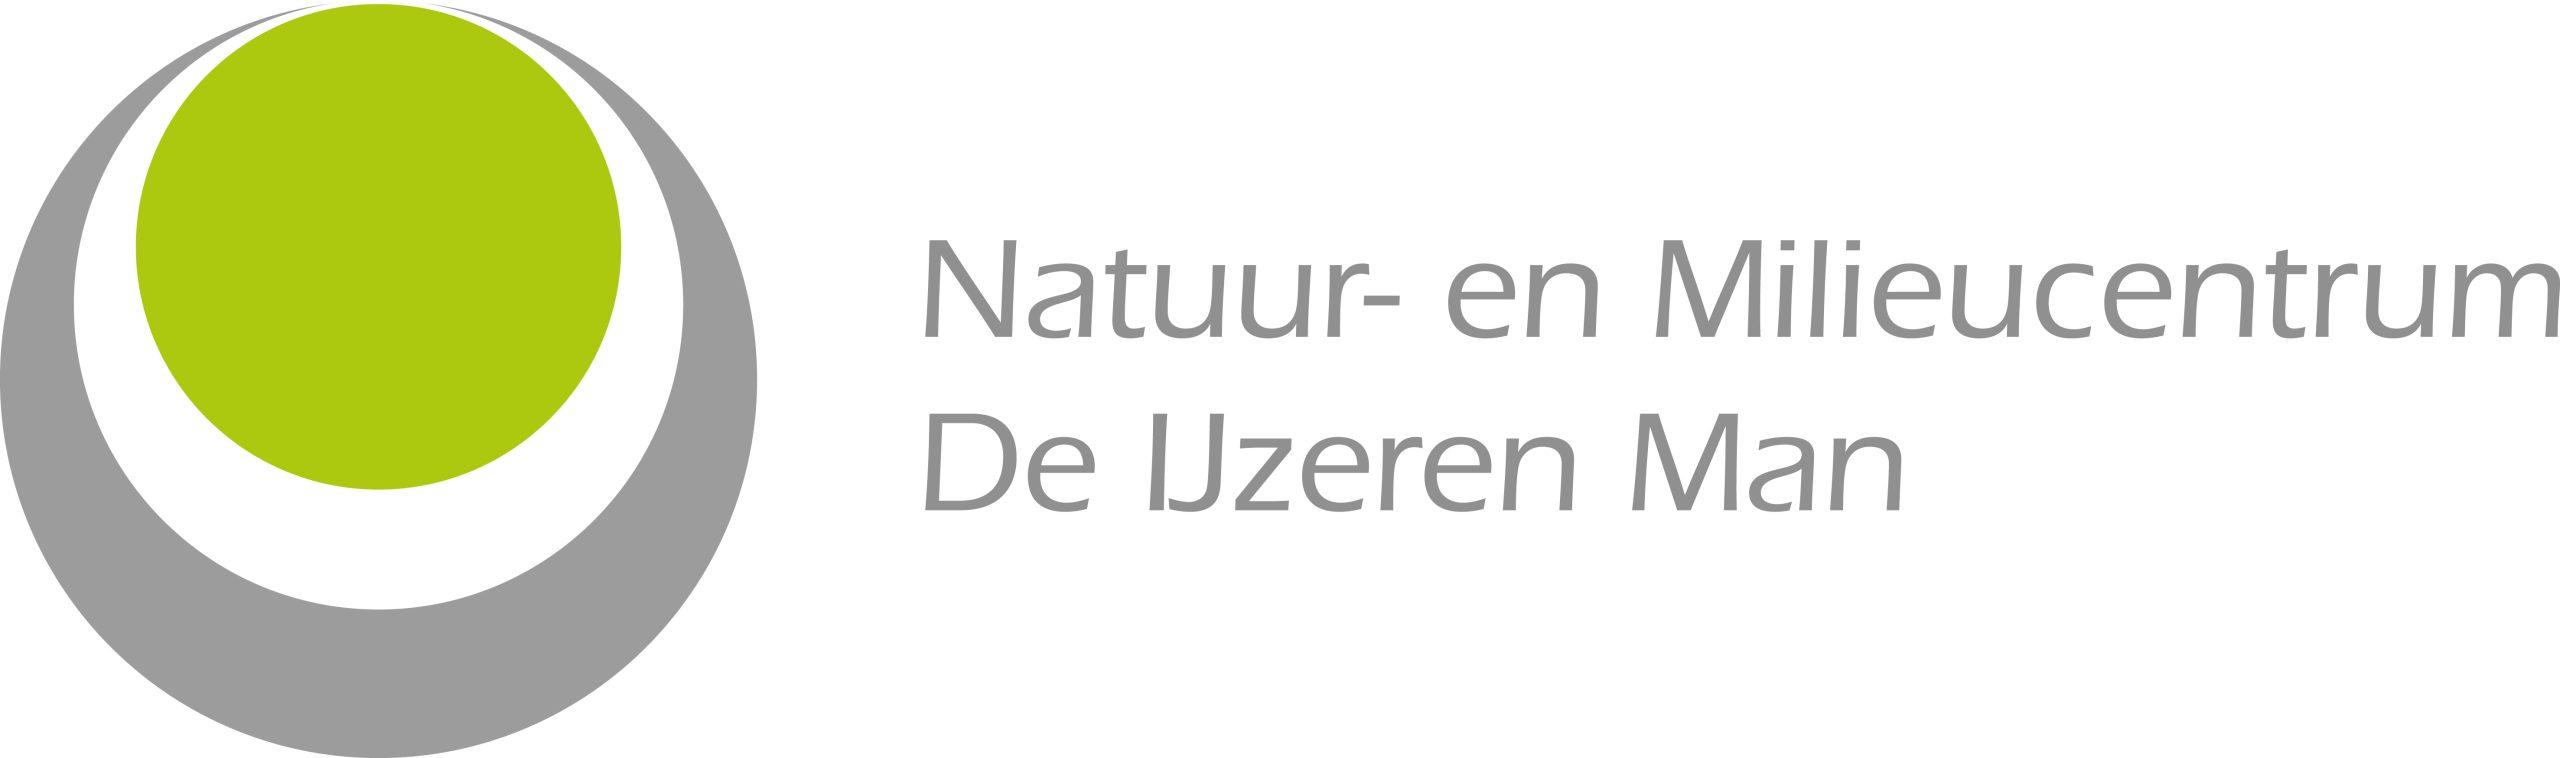 Natuur_en_milieucentrum_IJzeren_man_NMC_logo